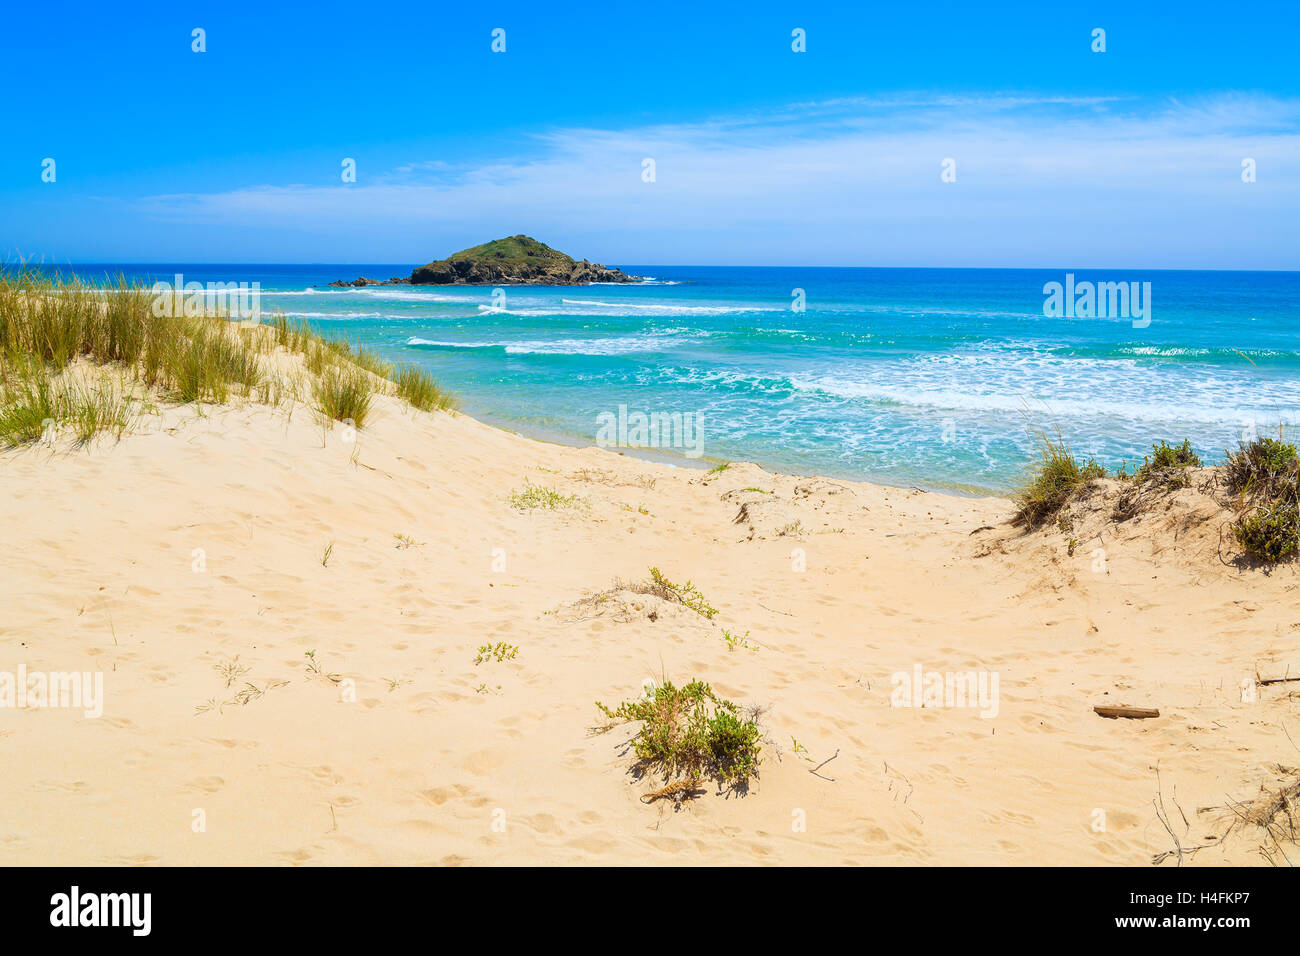 Grass on sand dune at Chia beach and turquoise sea view, Sardinia island, Italy Stock Photo